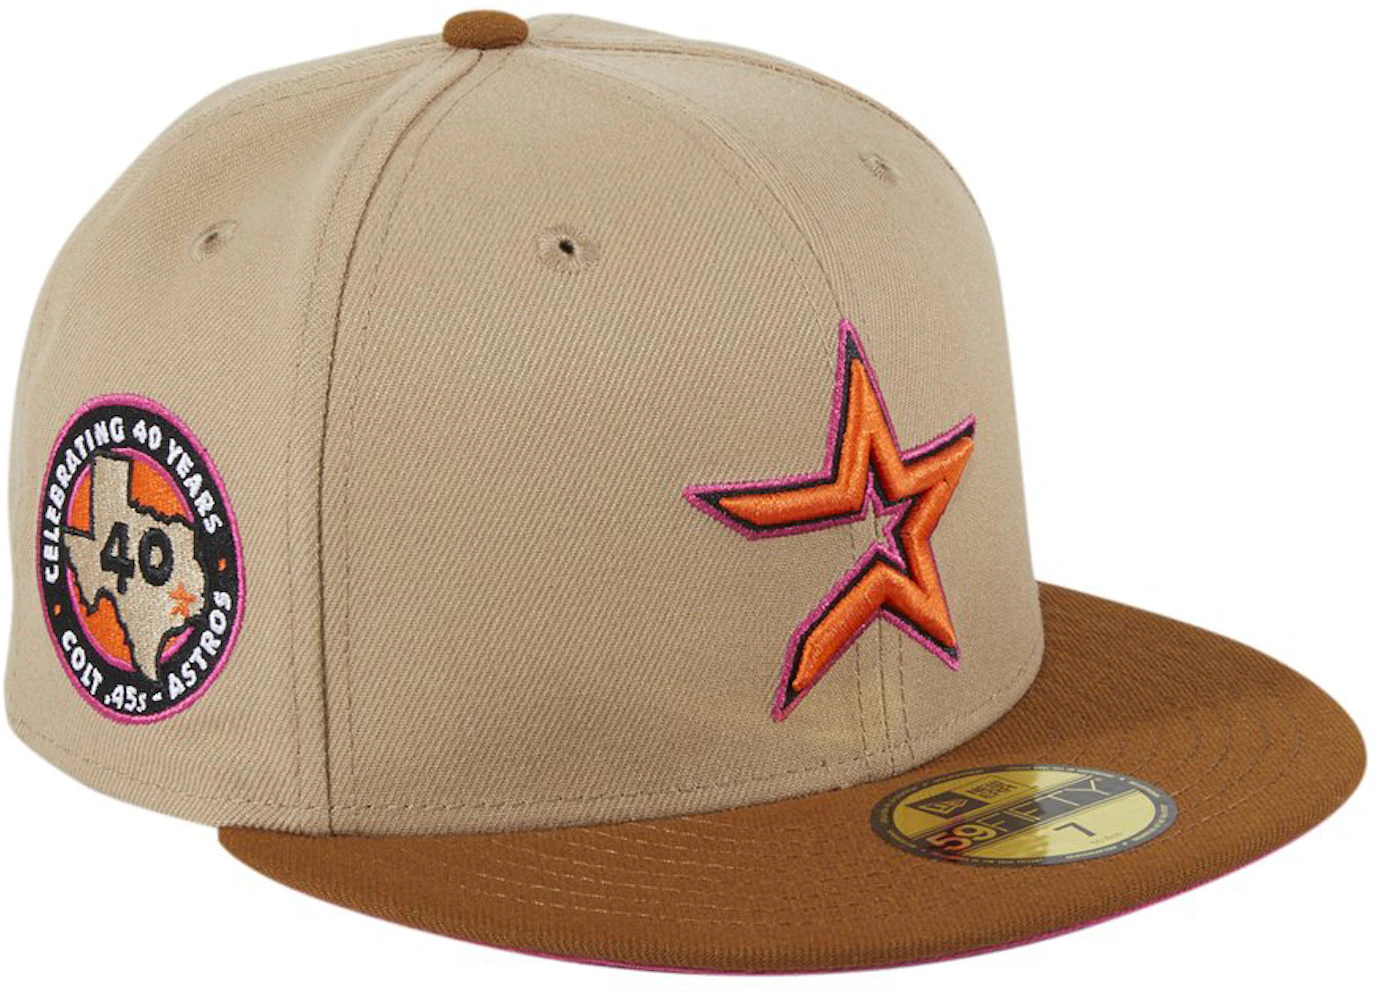 Hat Club releases limited Houston Astros concept caps for public sale